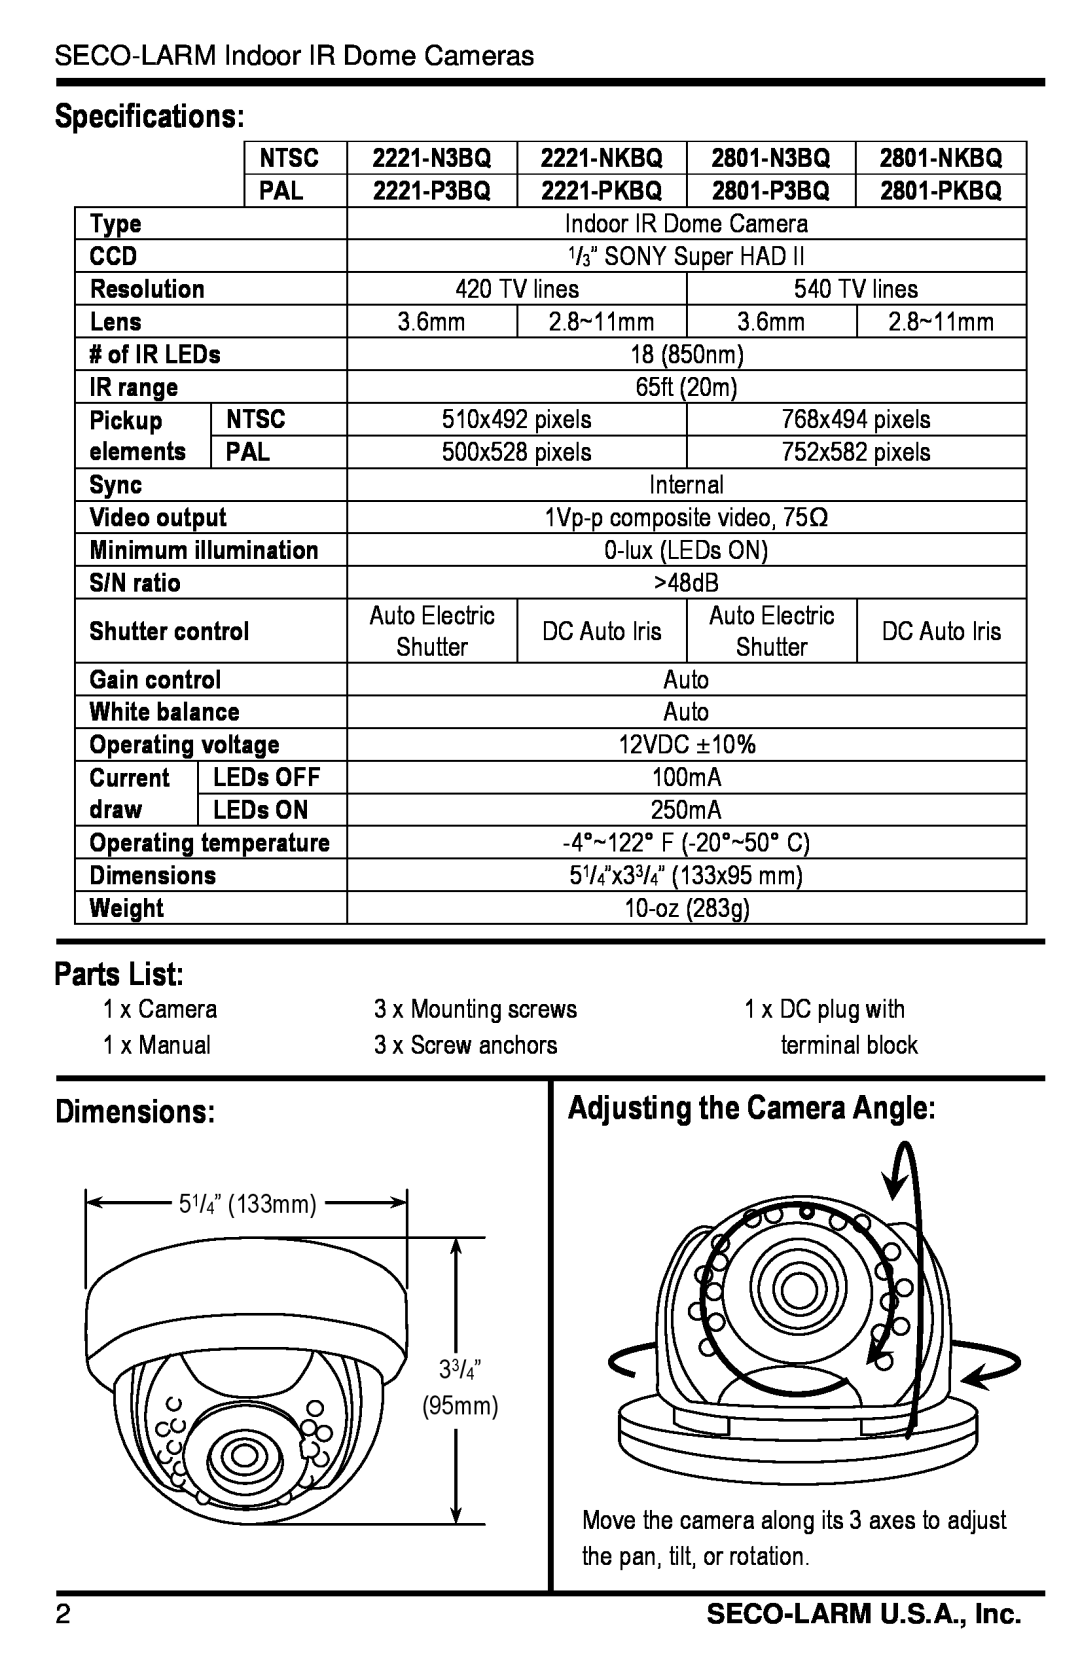 SECO-LARM USA EV-2221-P3BQ, EV-2221-PKBQ, EV-2221-N3BQ Specifications, Parts List, Dimensions, Adjusting the Camera Angle 